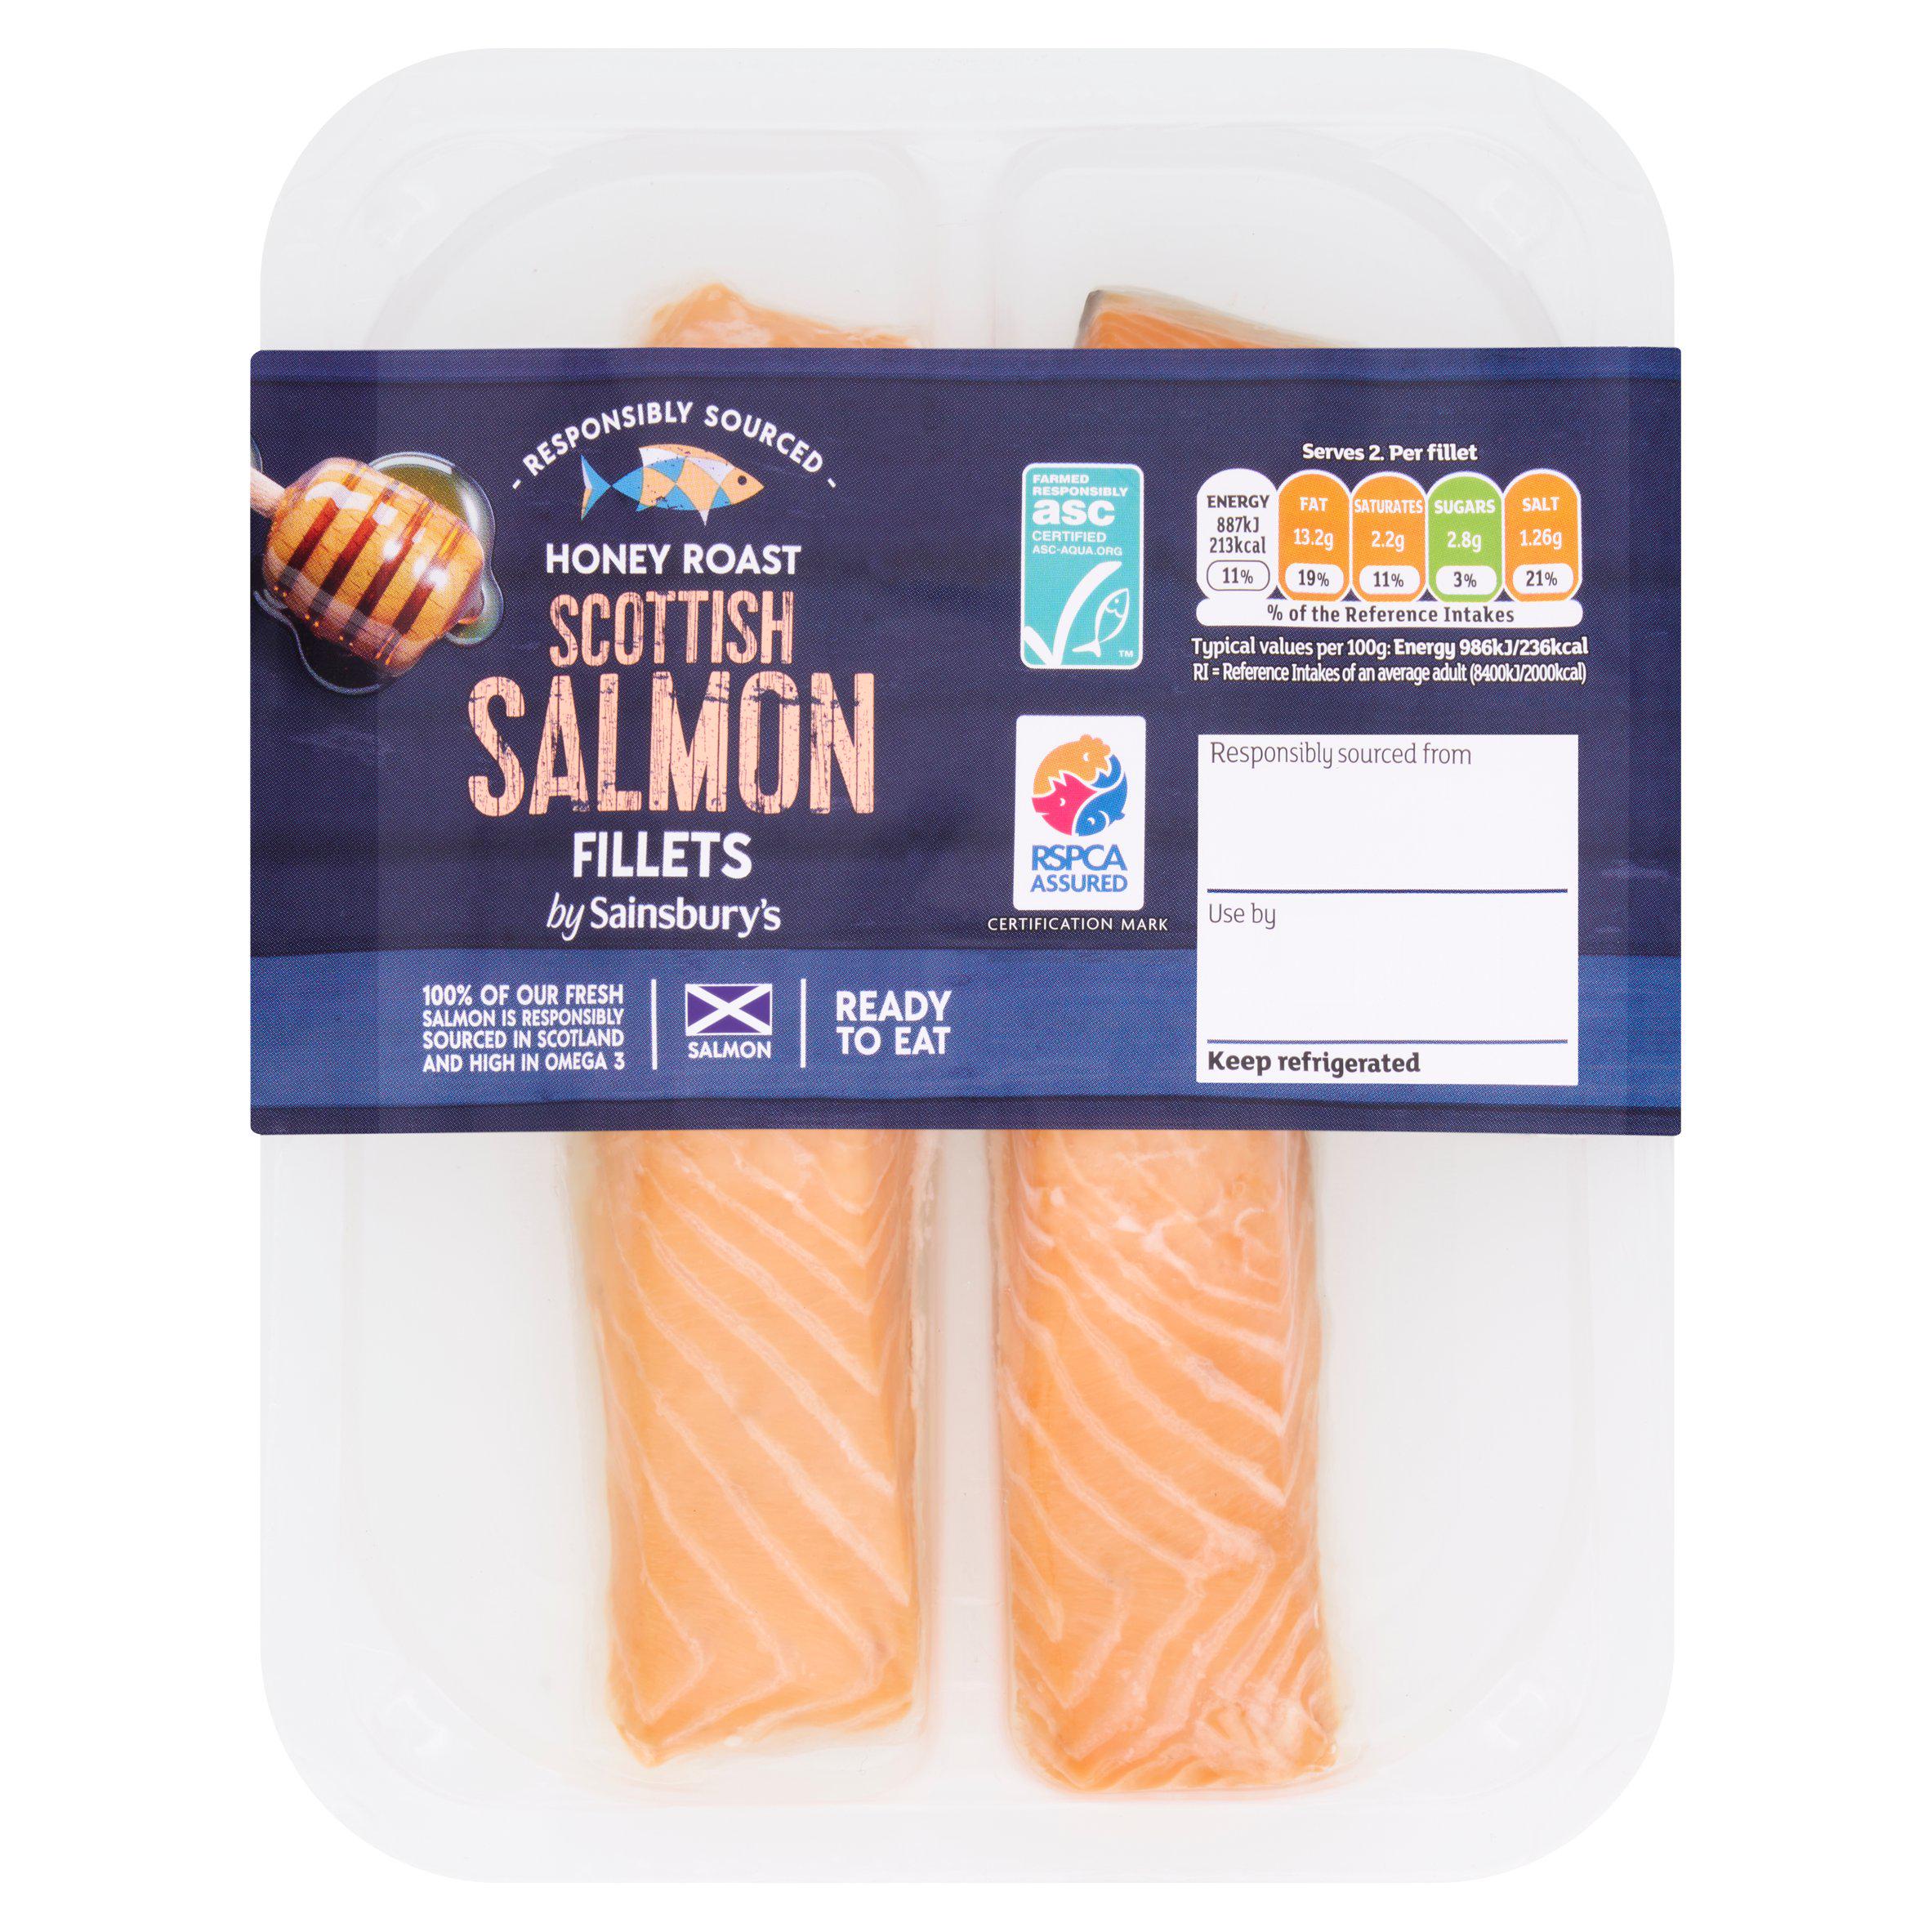 Sainsbury's Honey Roast ASC Scottish Salmon Portions x2